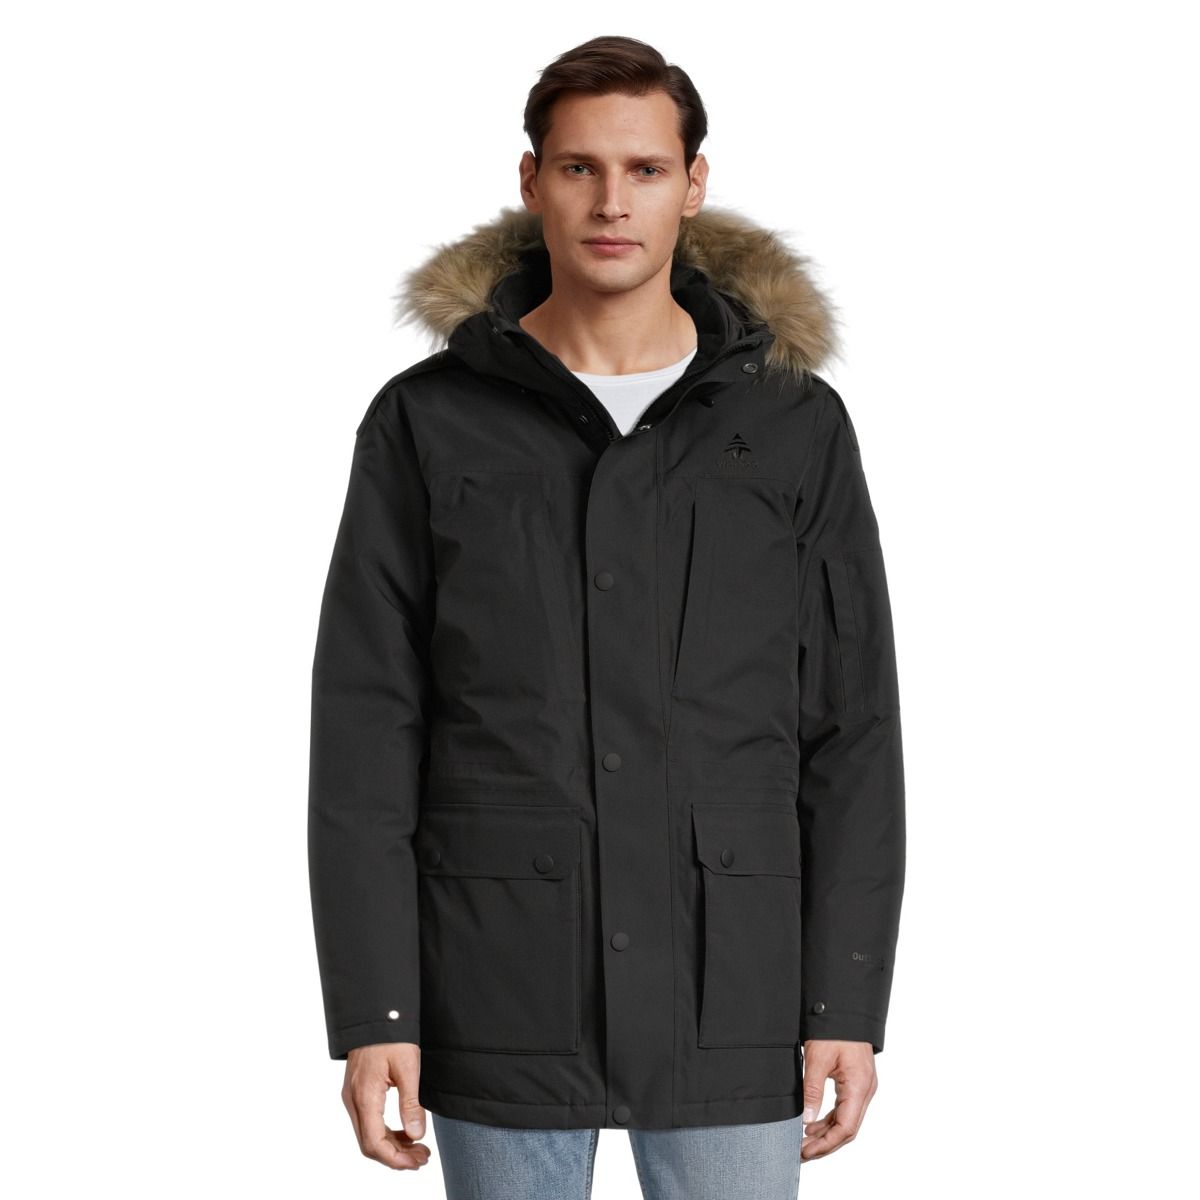 Woods Men's Avens Winter Parka/Jacket, Long, Insulated, Hooded